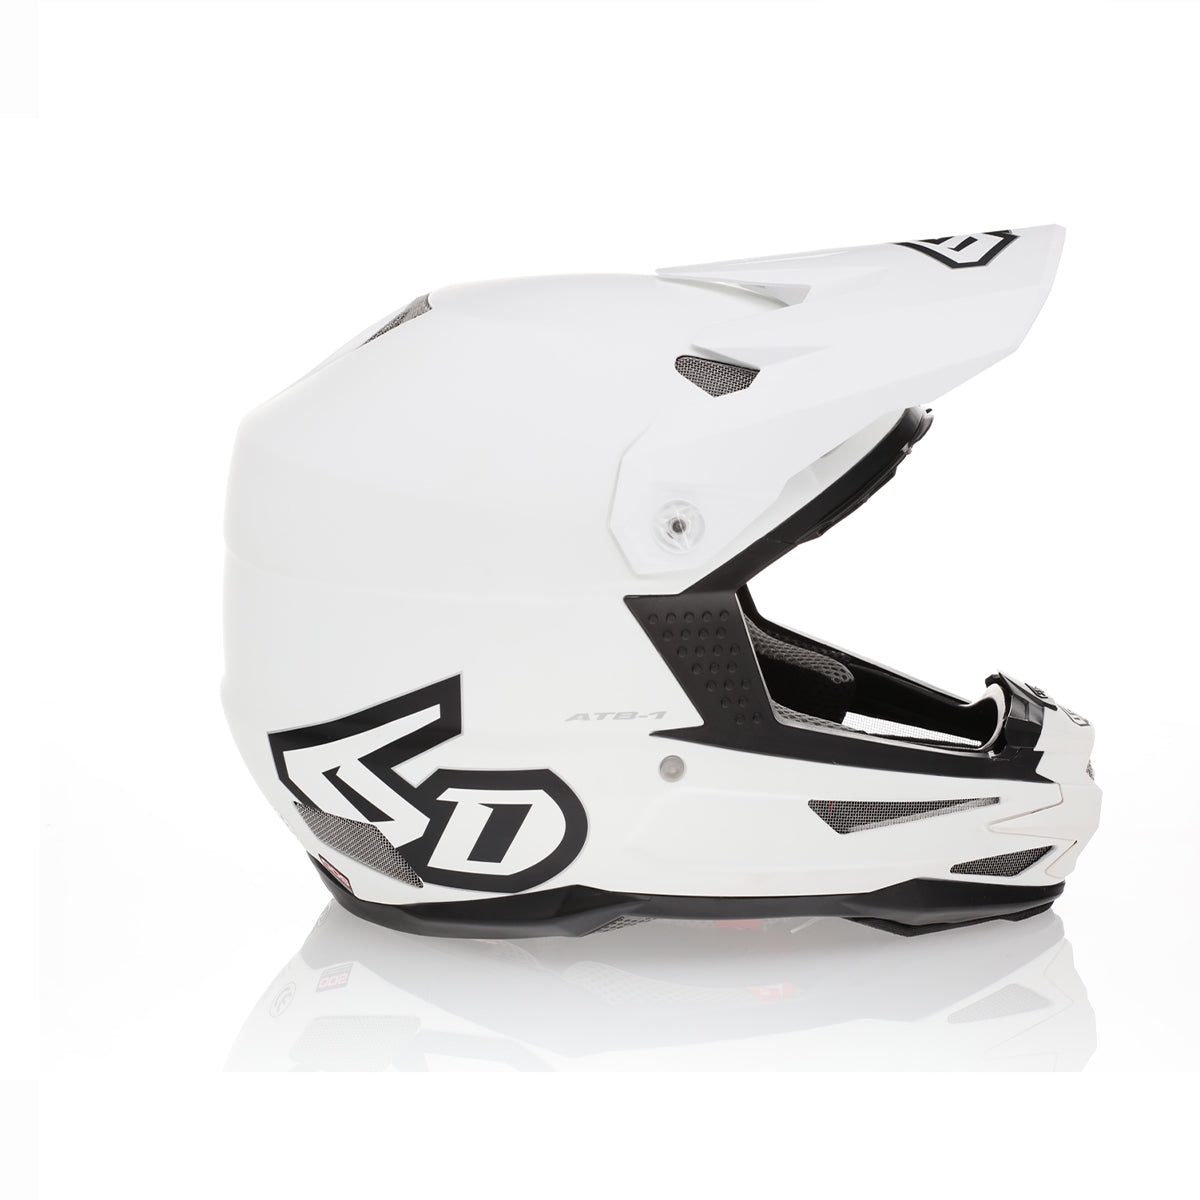 Bike – 6D Helmets Europe